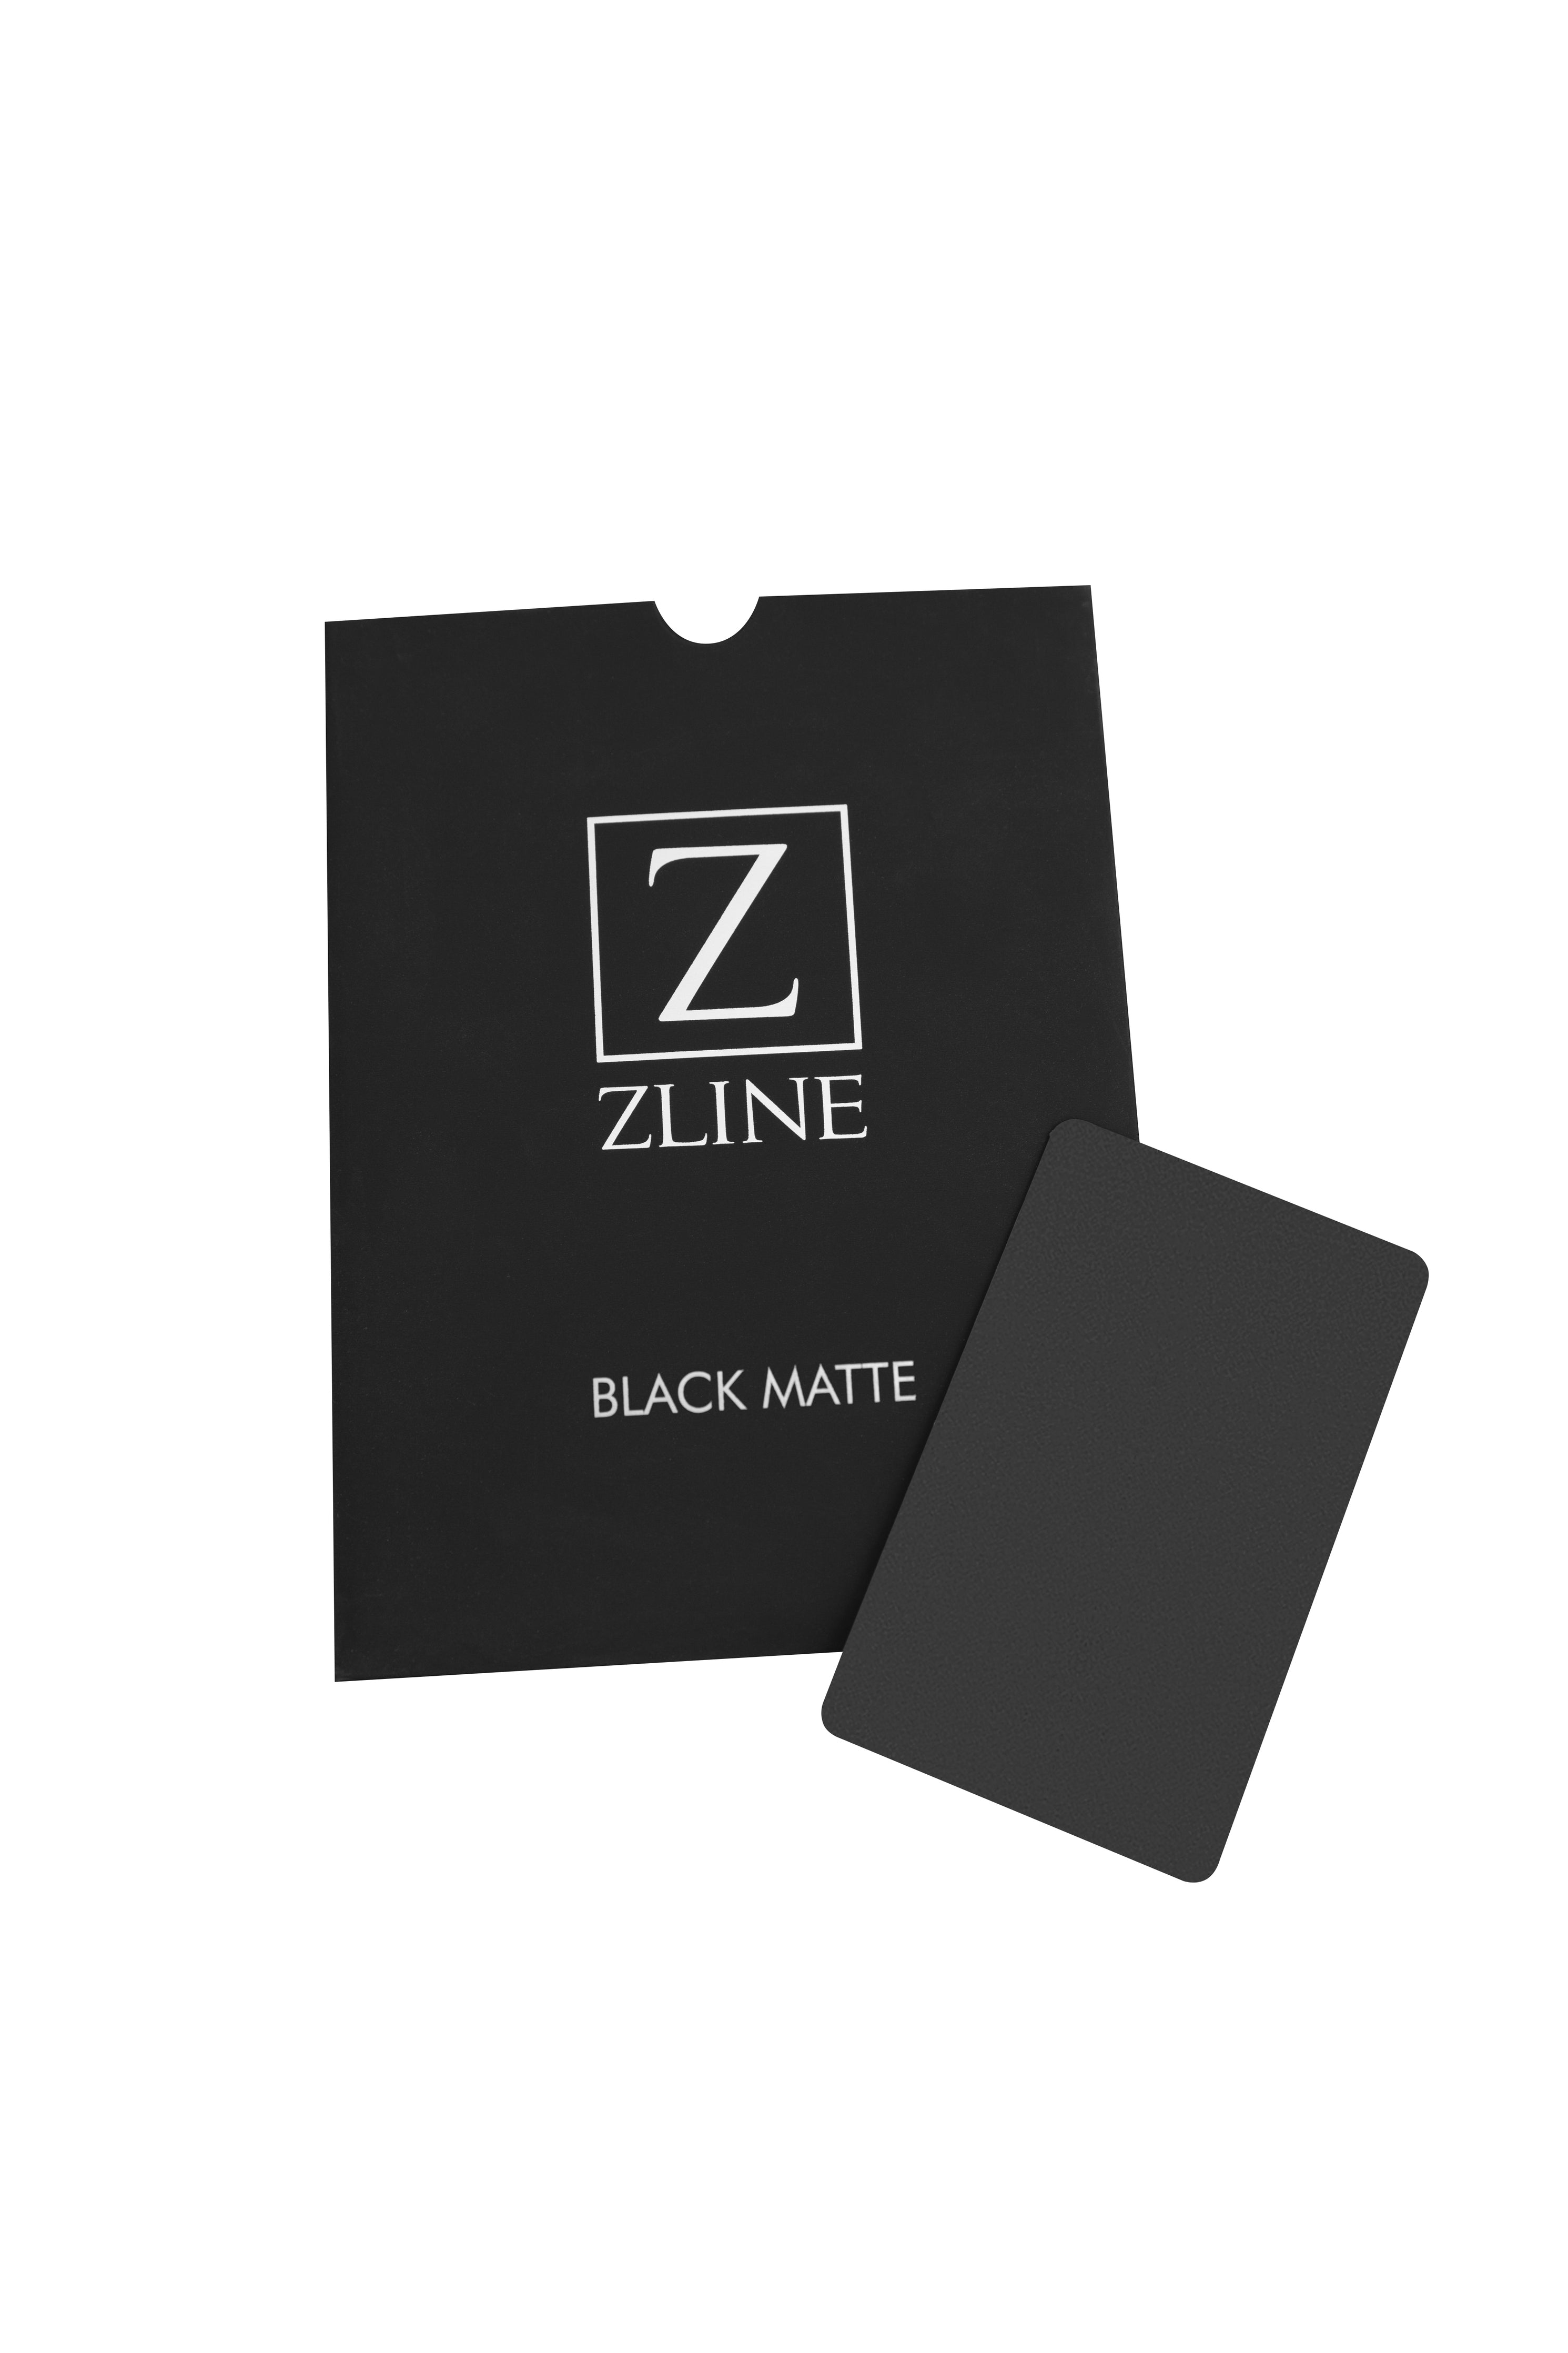 3 x 5 Black Matte Sample (CS-BLM)